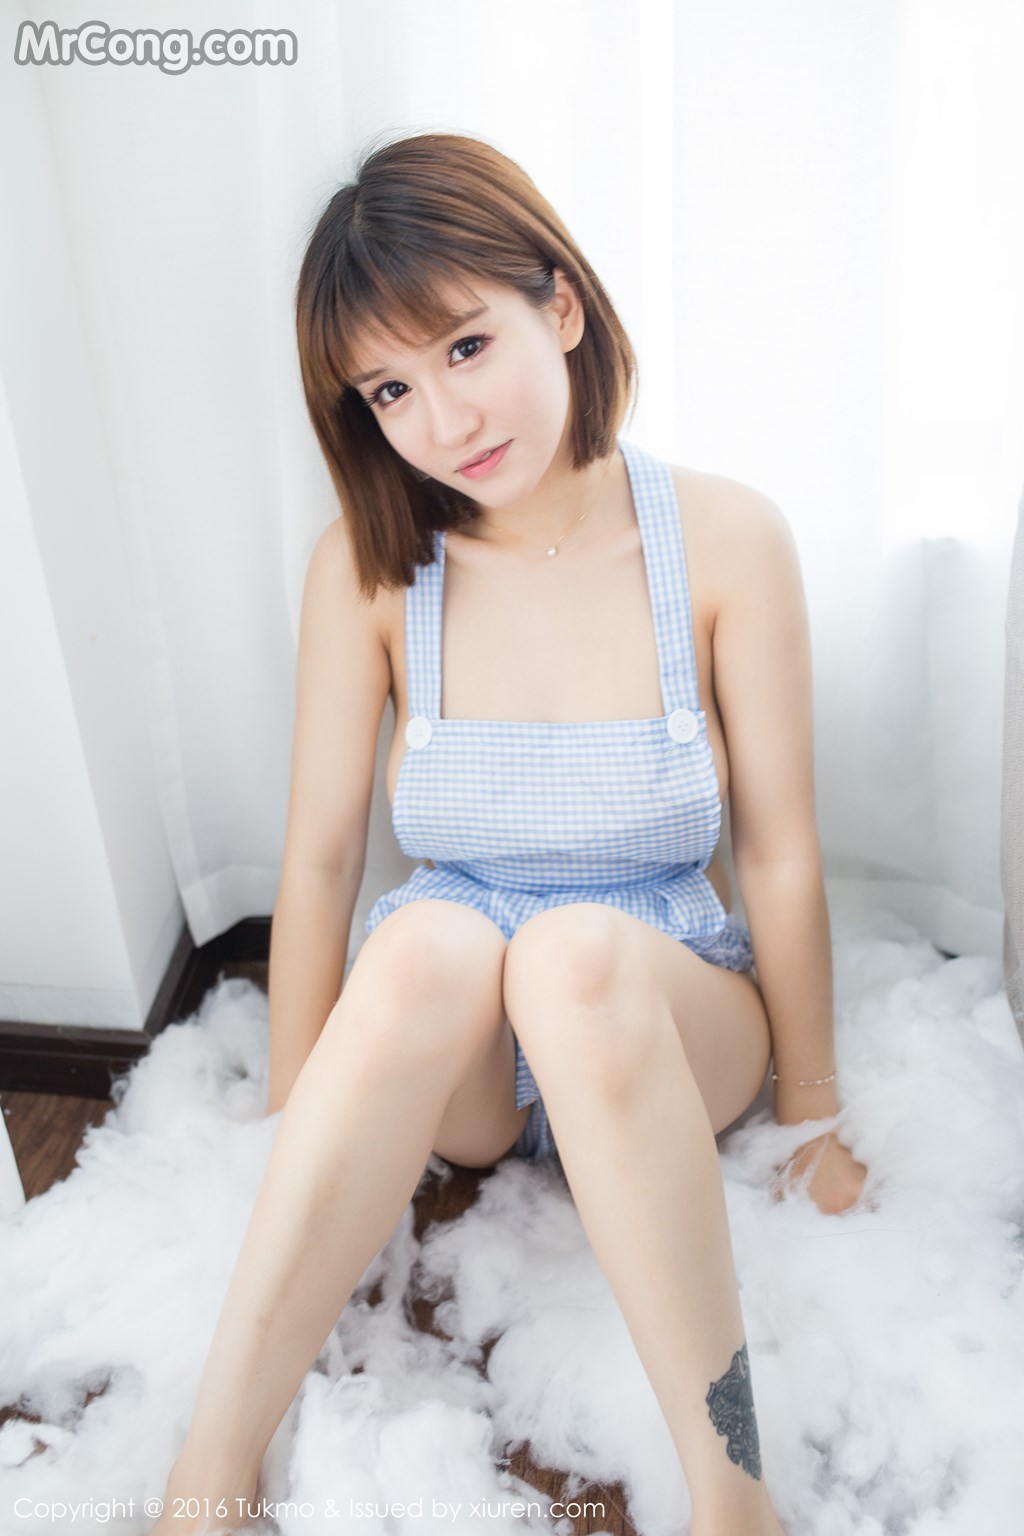 Tukmo Vol.092: Model Aojiao Meng Meng (K8 傲 娇 萌萌 Vivian) (41 photos) photo 1-18